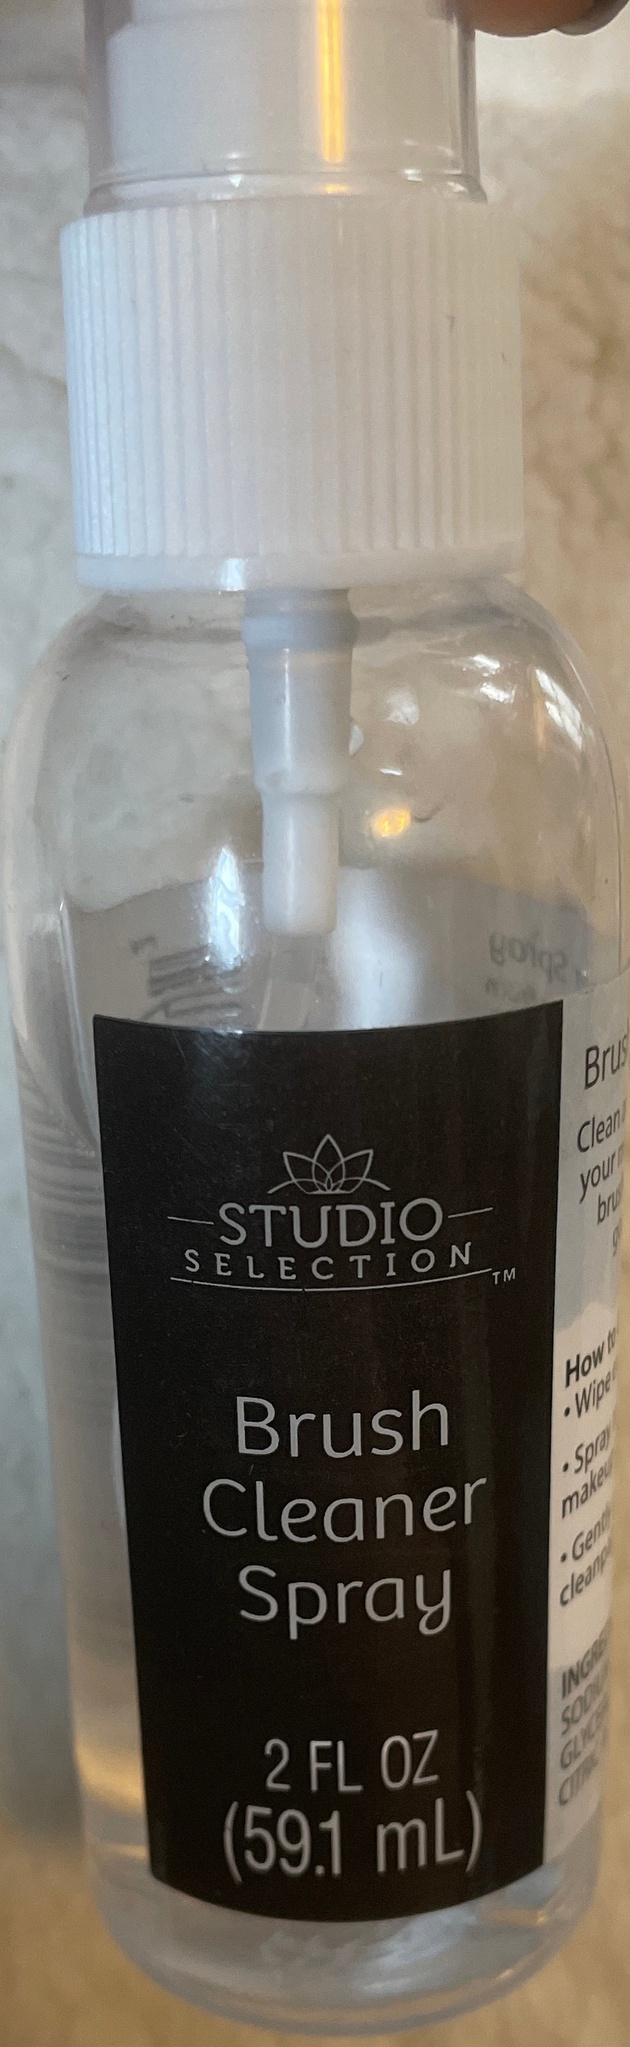 Studio Selection Brush Cleaner Spray